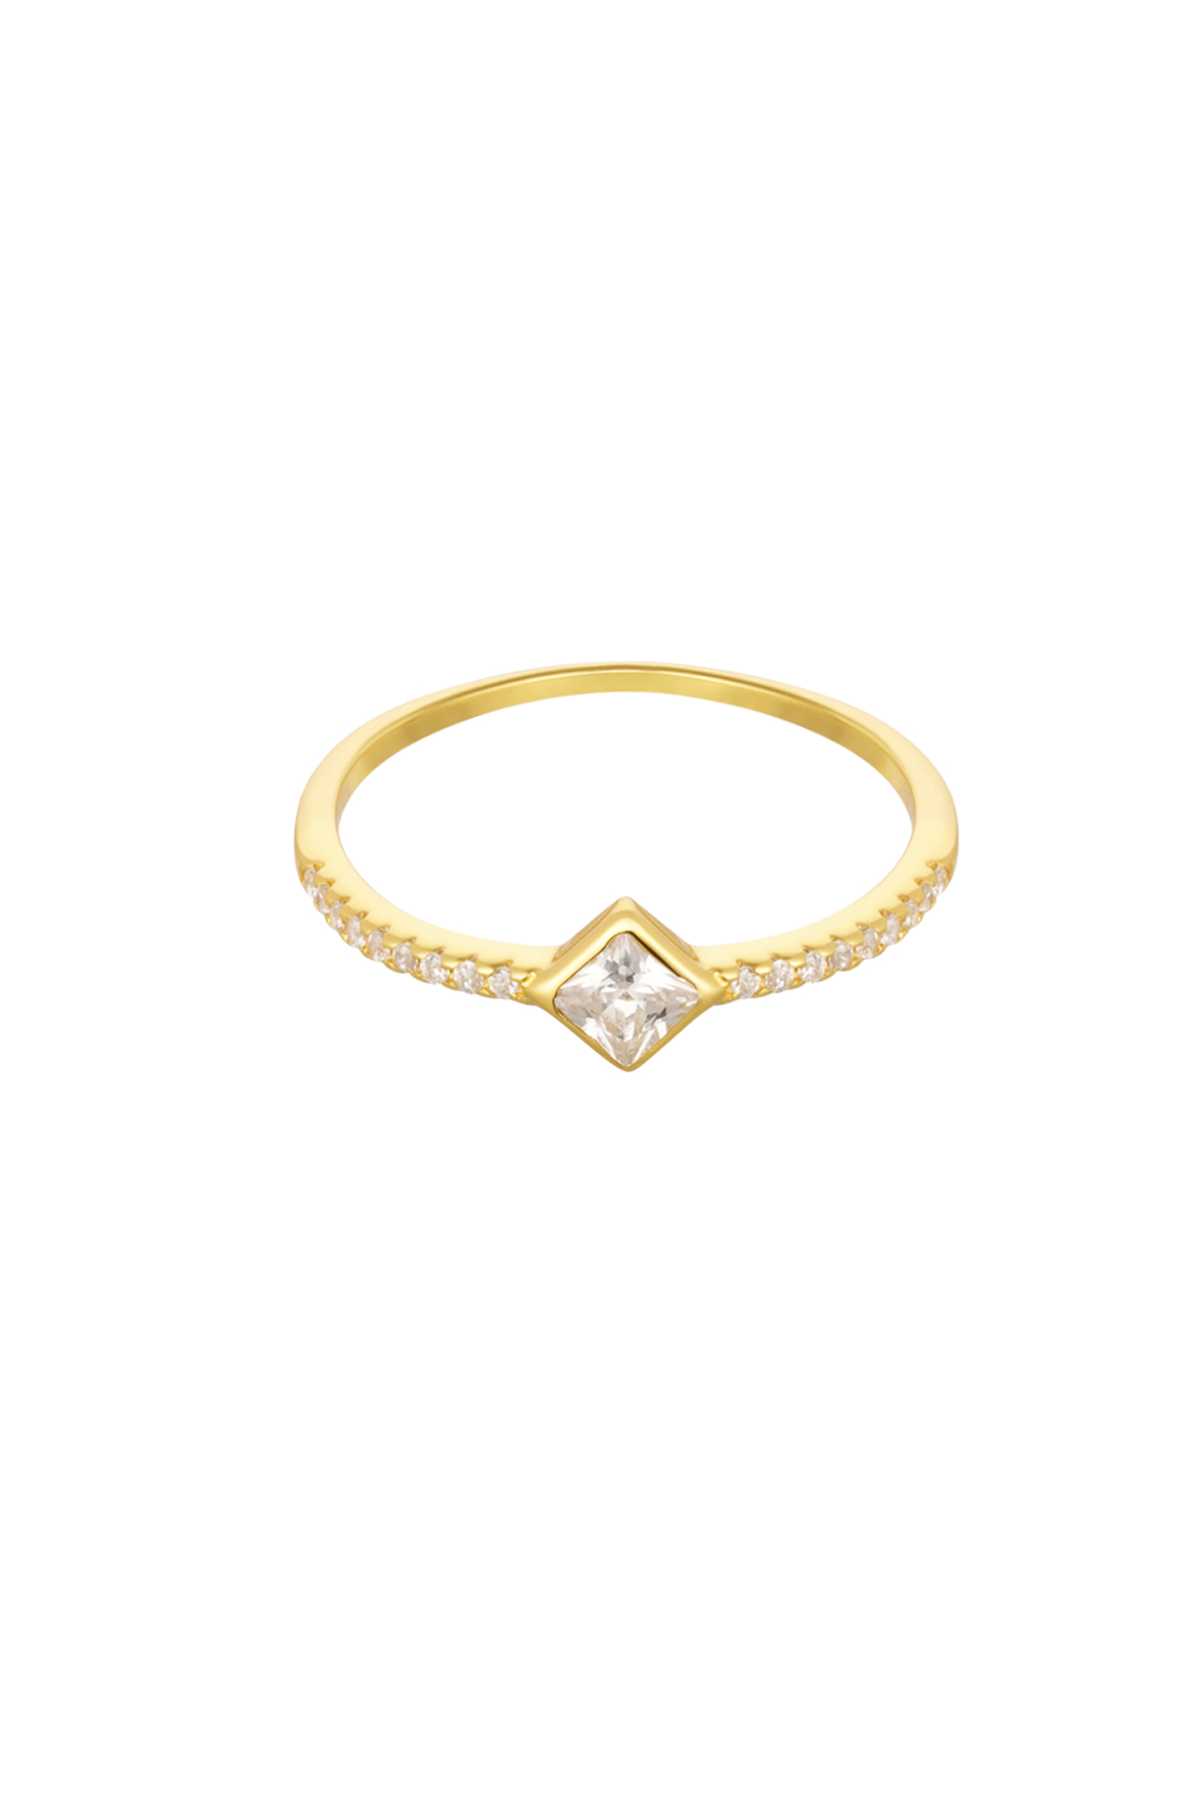 Ring with diamond rhinestones - 925 silver -18 